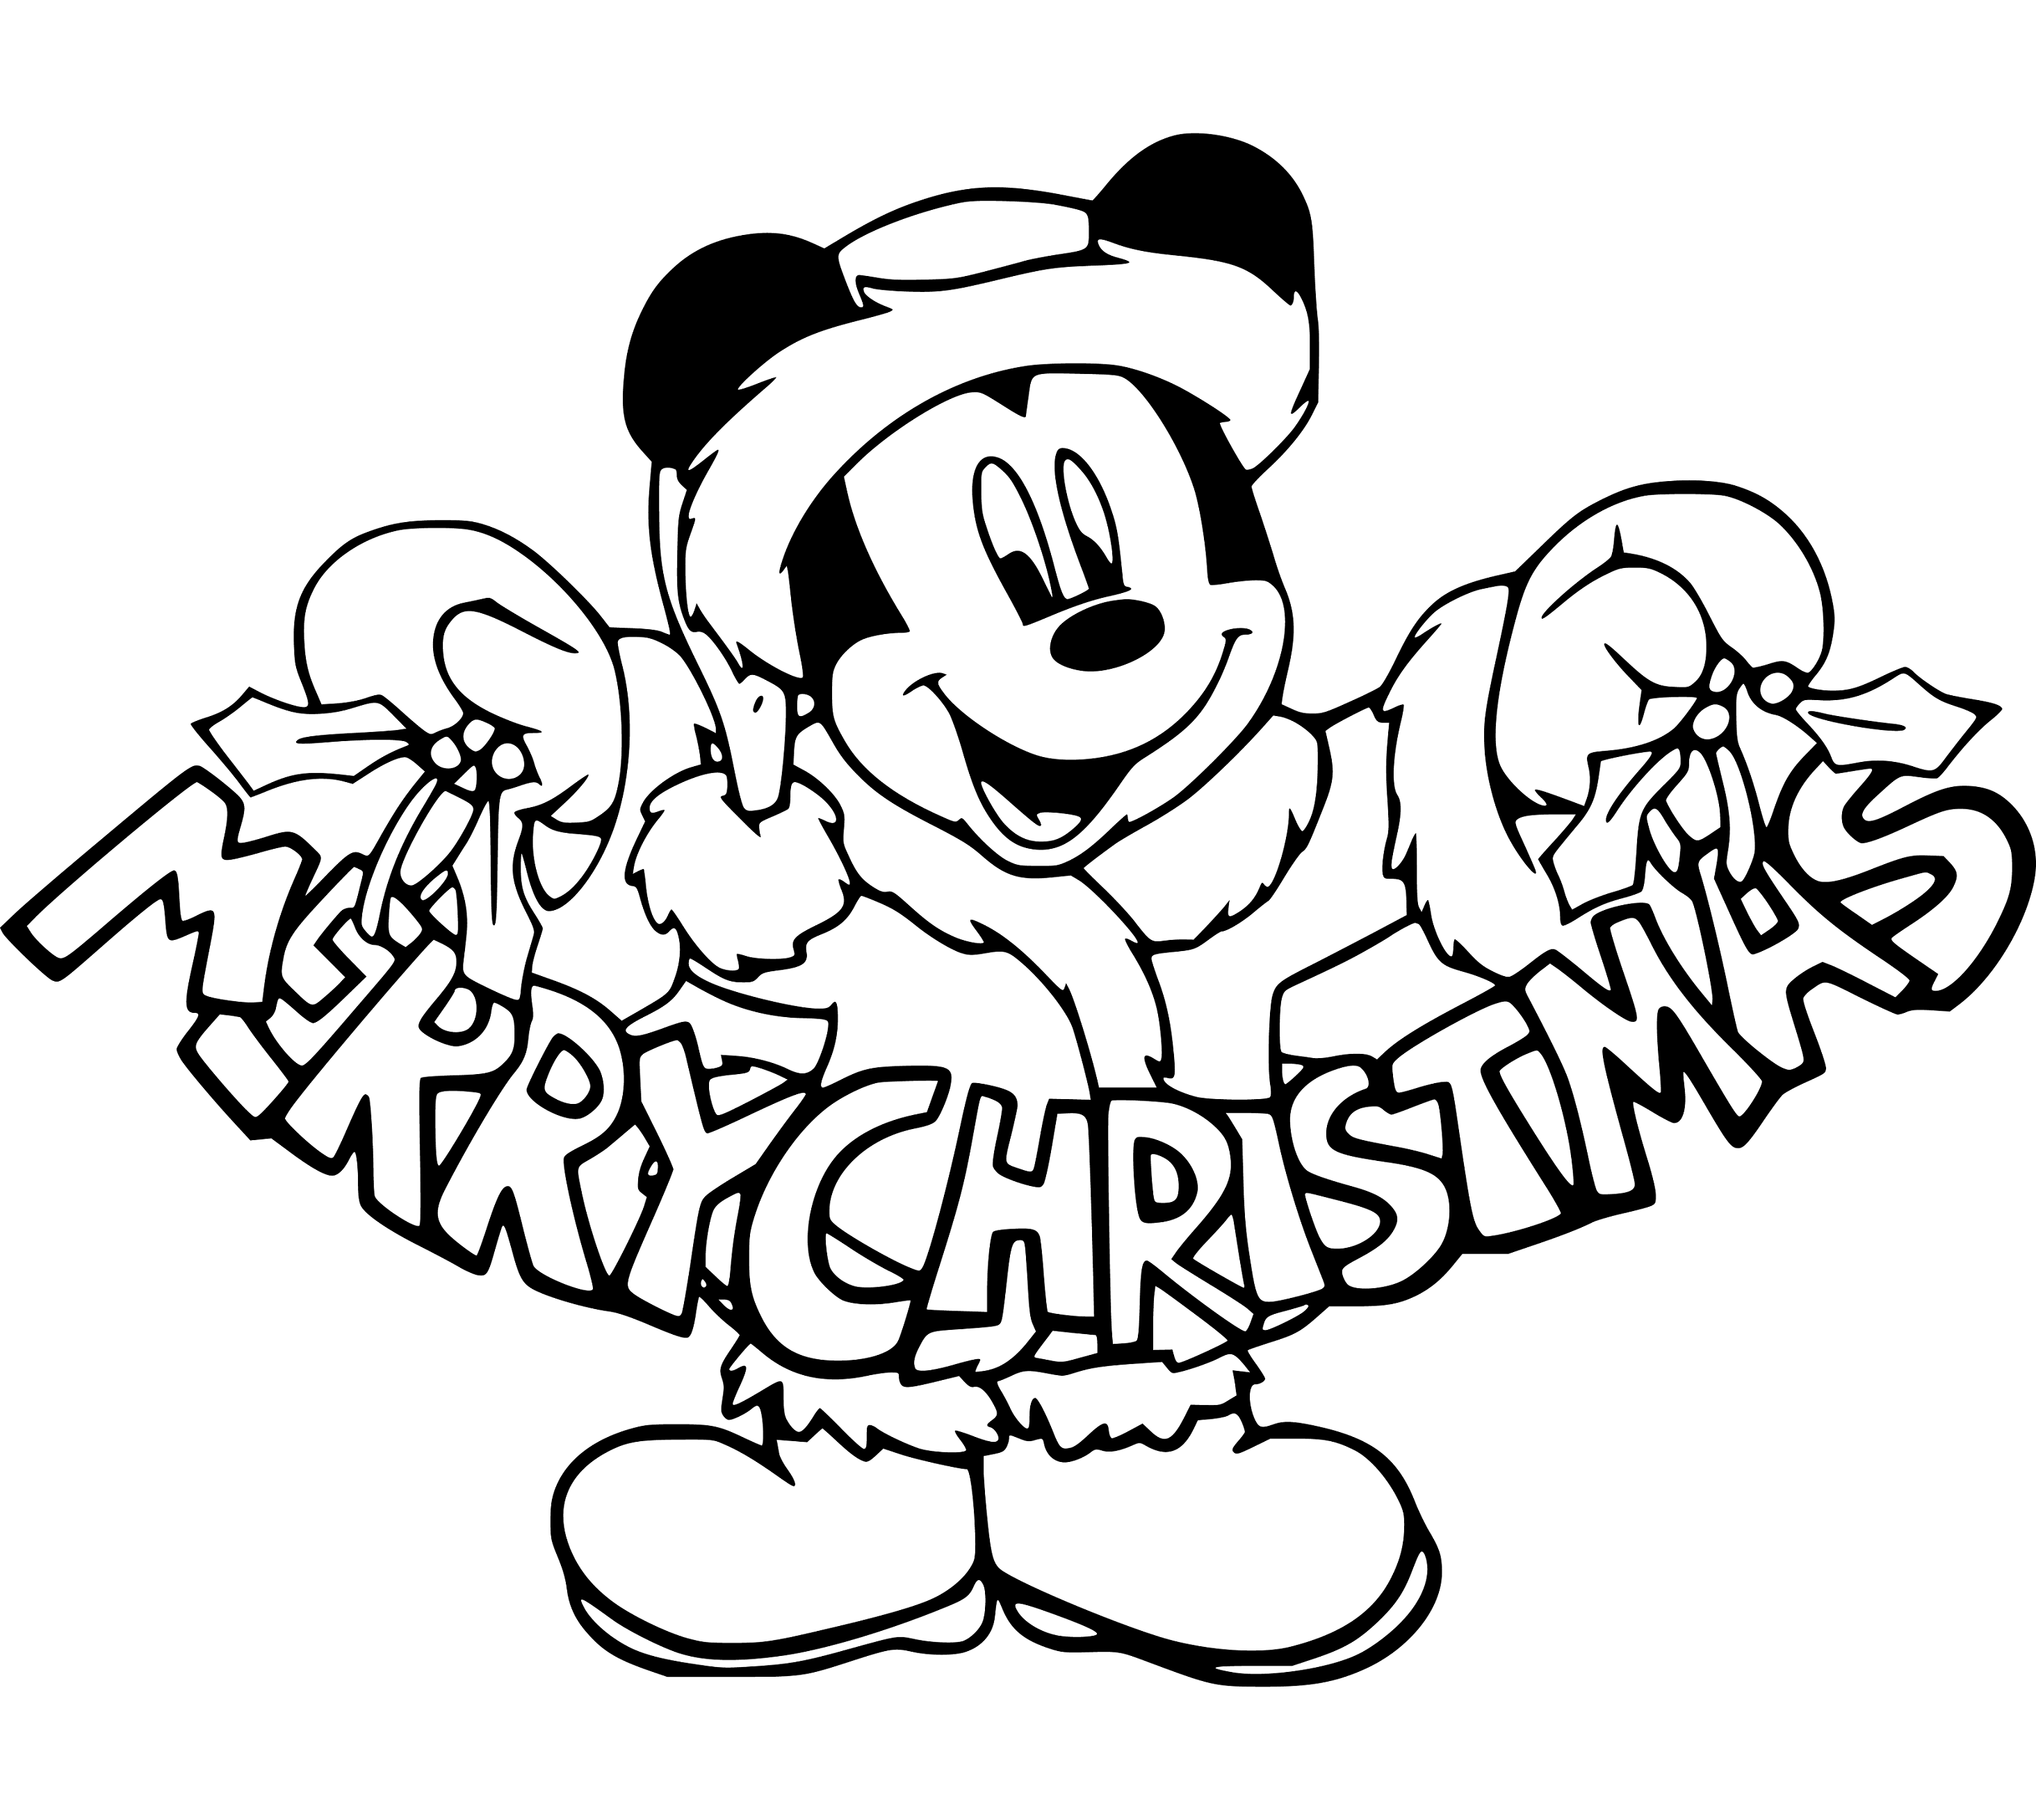 Mickey Mouse celebrates Merry Christmas Coloring Page Printable - SheetalColor.com